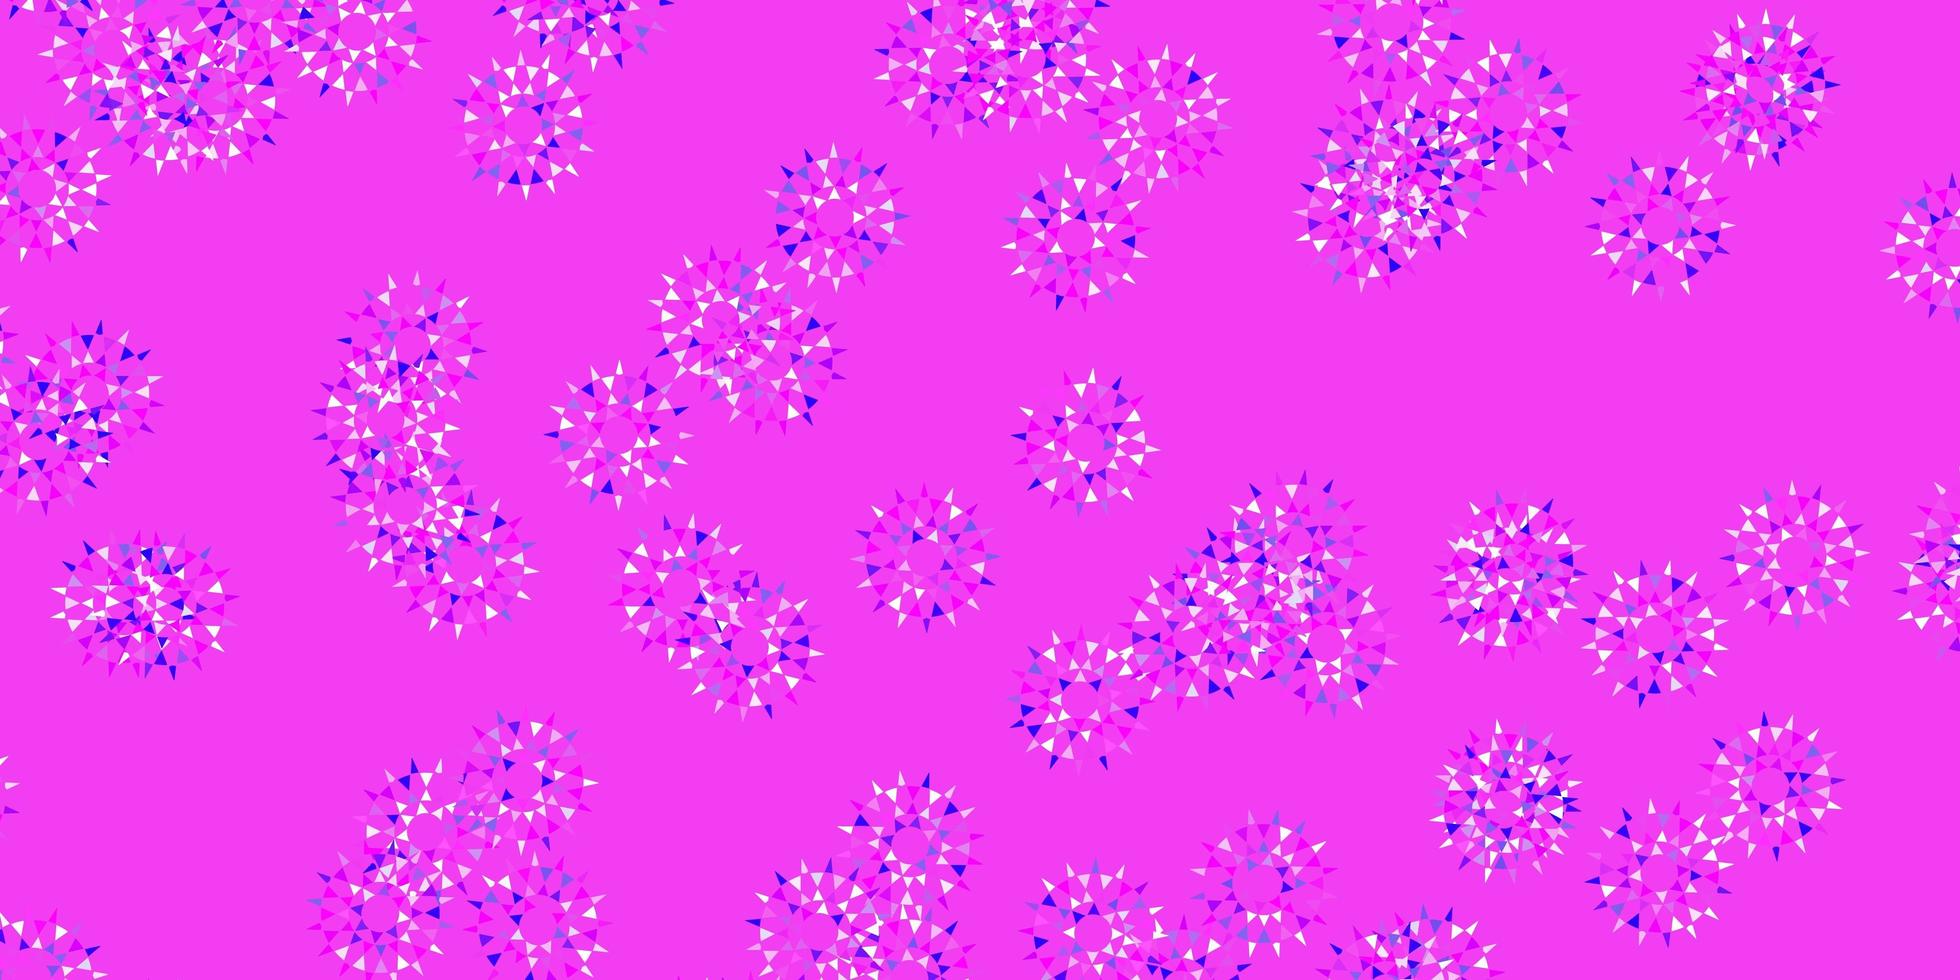 diseño natural de vector violeta claro, rosa con flores.